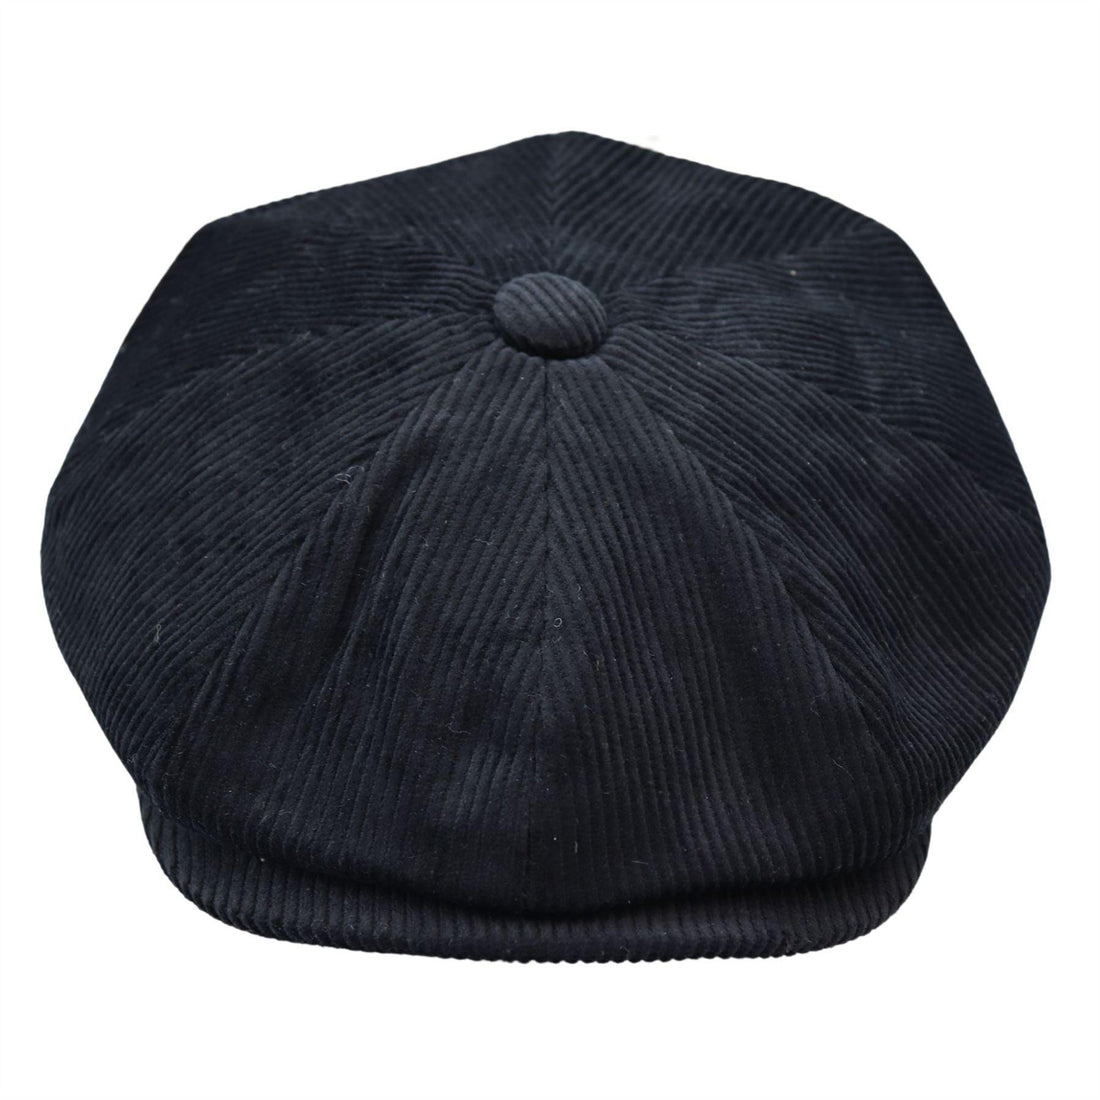 Mens 8 Panel Razor Baker Boy Hat Corduroy Blinders Newsboy Flat Caps Black Classic - Knighthood Store